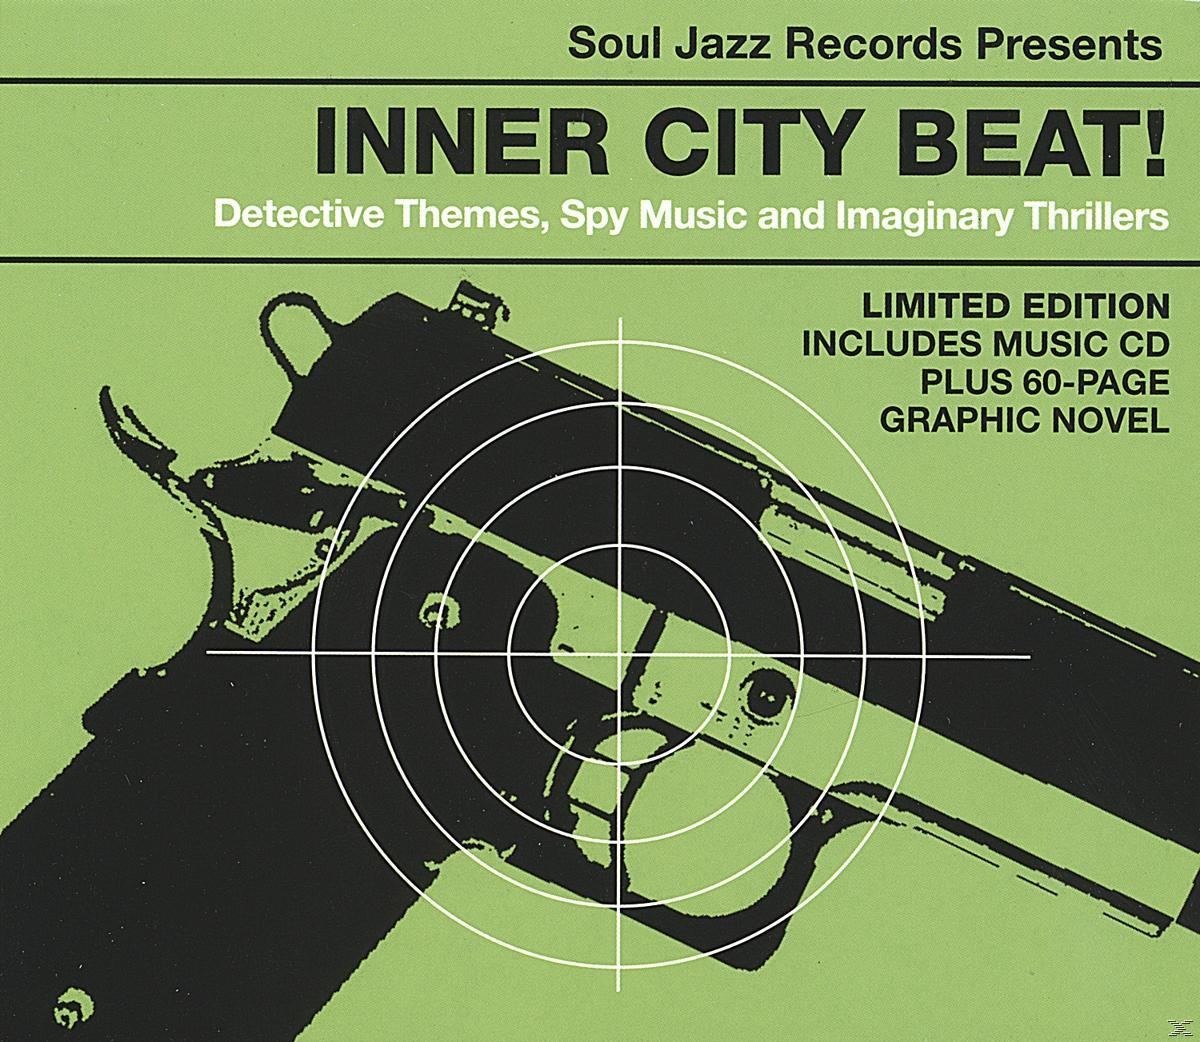 City - - (CD) Beat! Inner VARIOUS